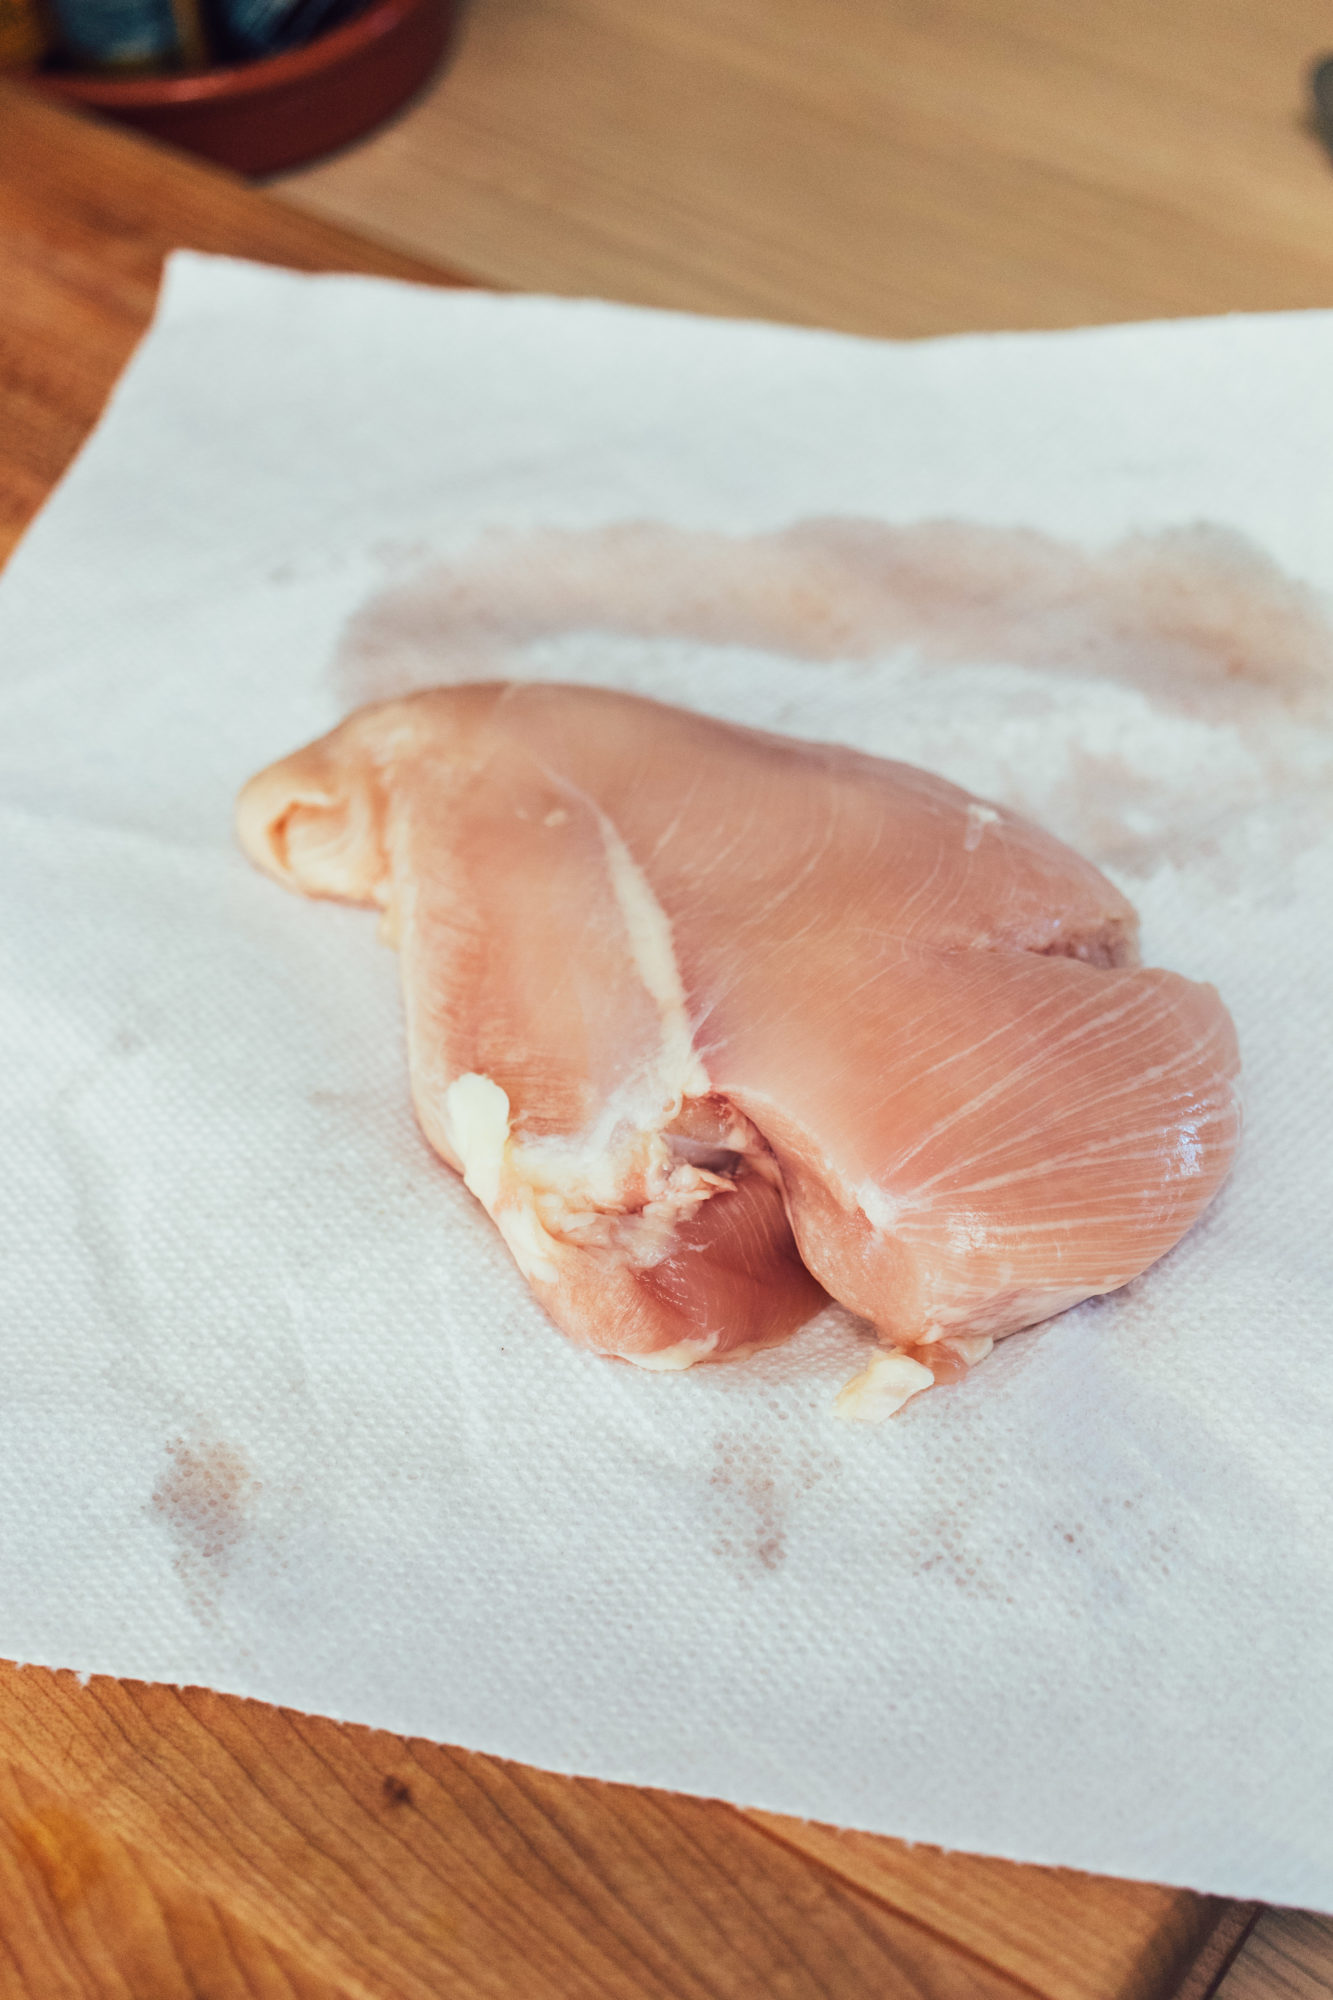 Easy Cast Iron Chicken Breast walkthrough. A great paleo, healthy, gluten-free, dairy-free, whole30 recipe.